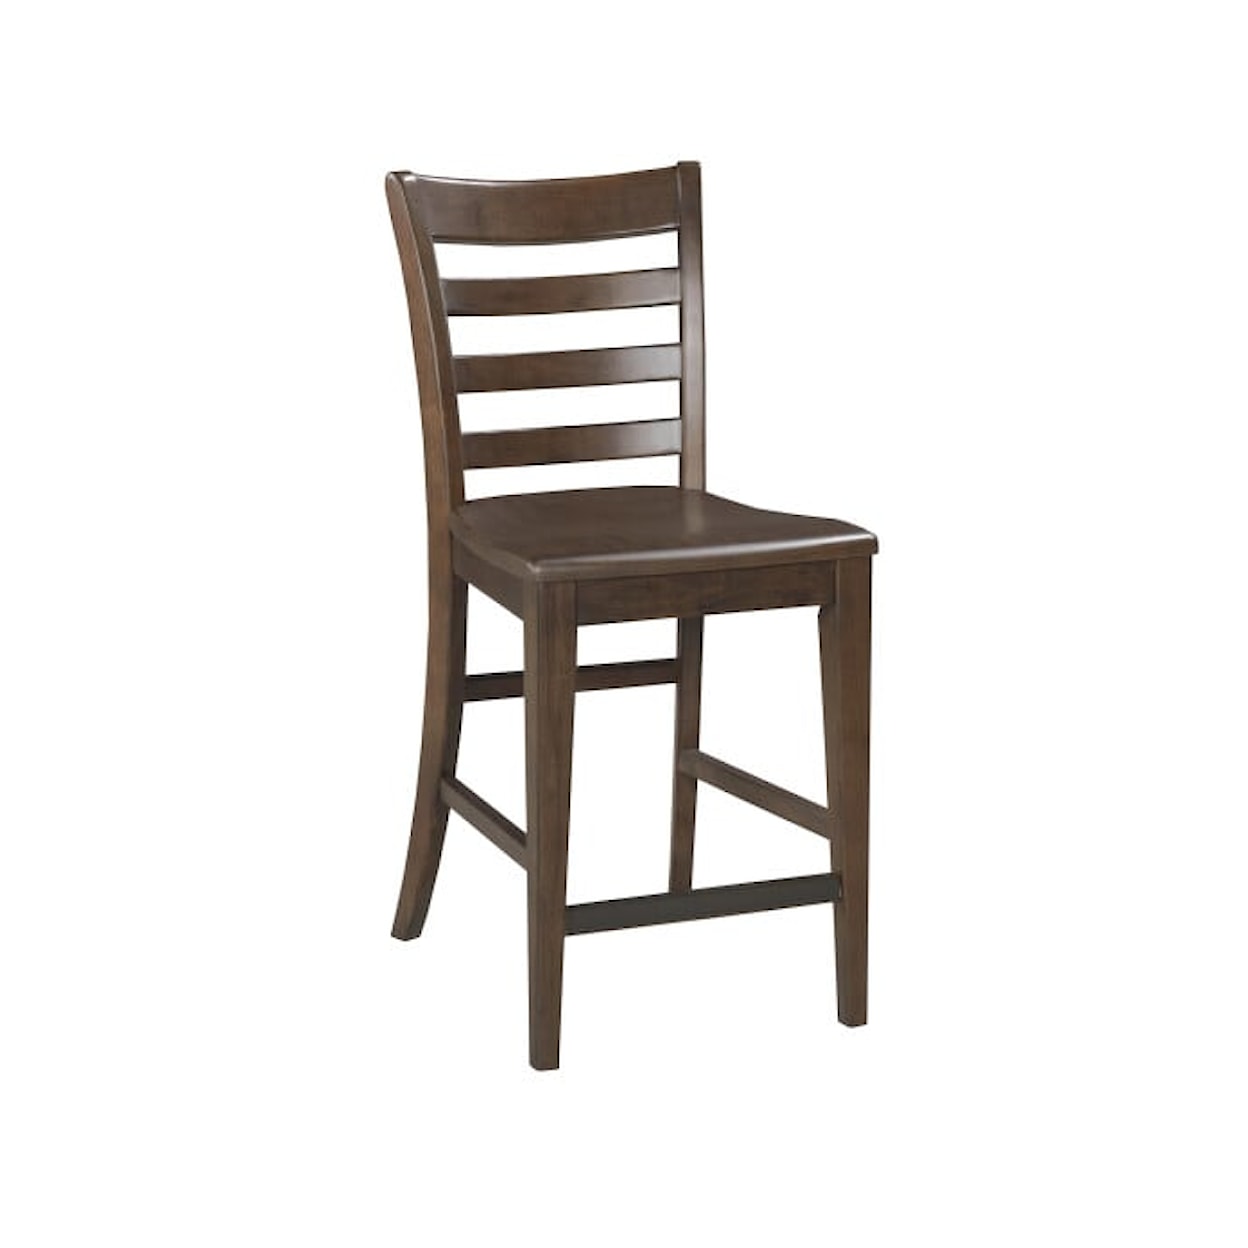 Kincaid Furniture Kafe' Tall Ladderback Chair, Mocha